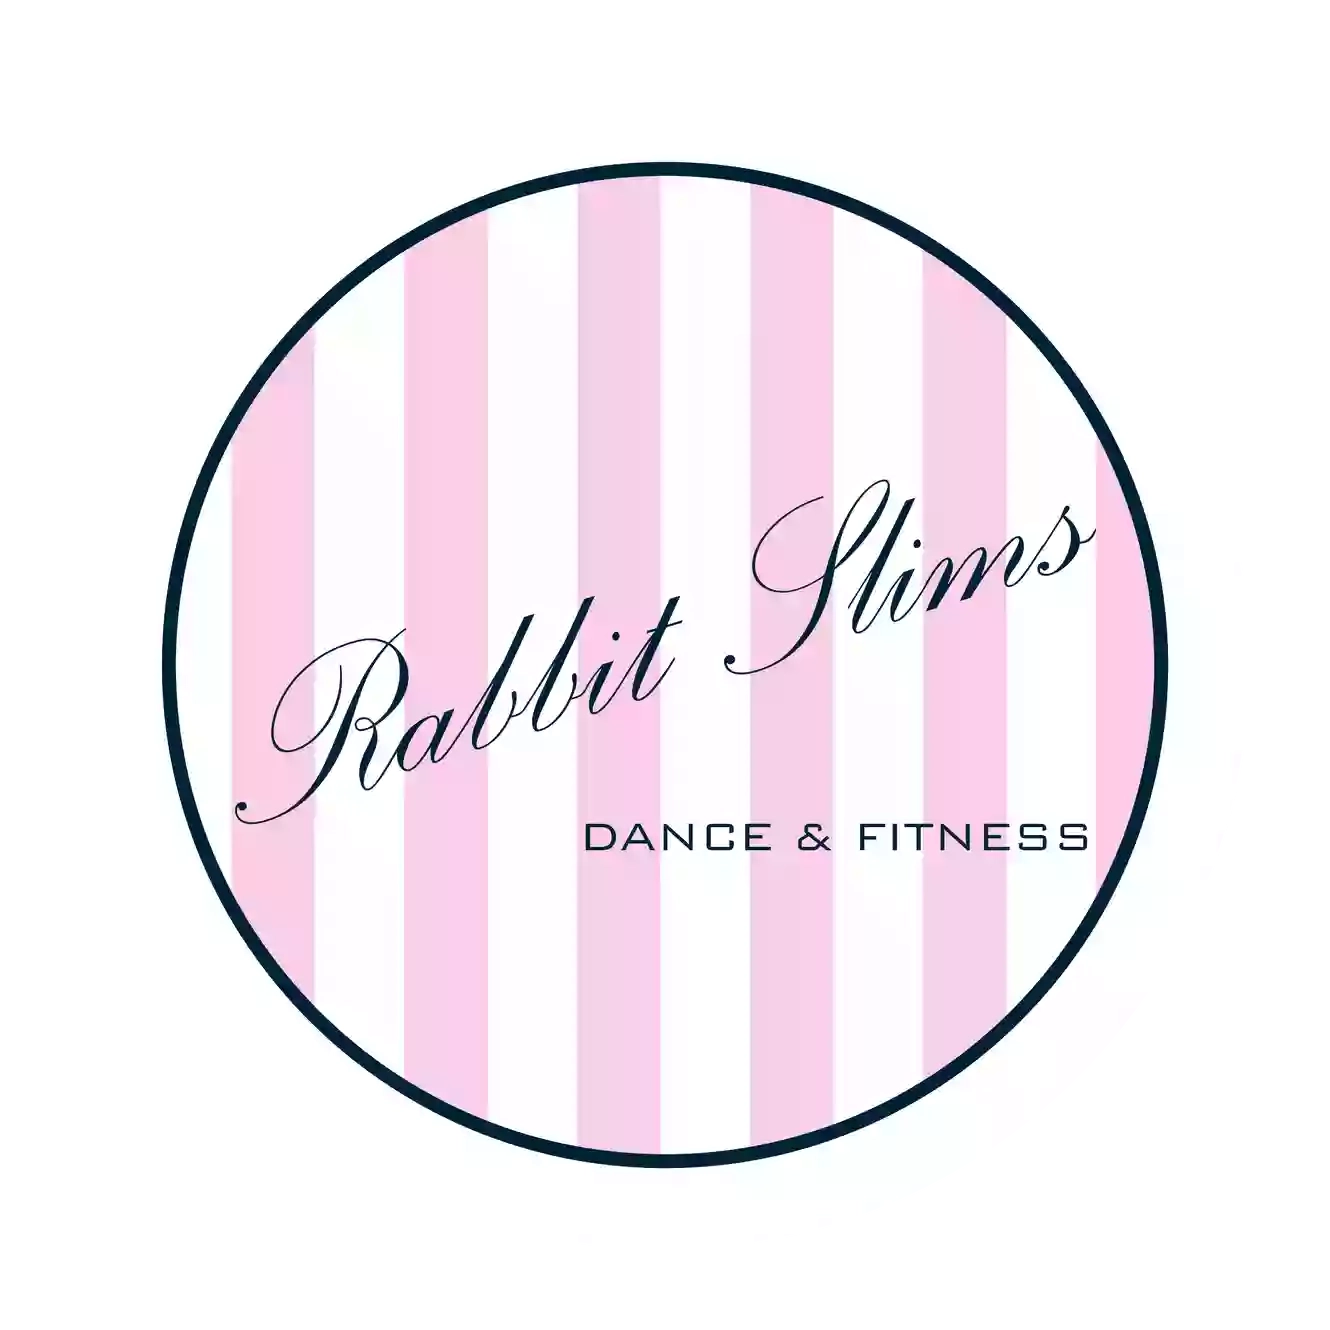 Rabbit Slims Dance & Fitness